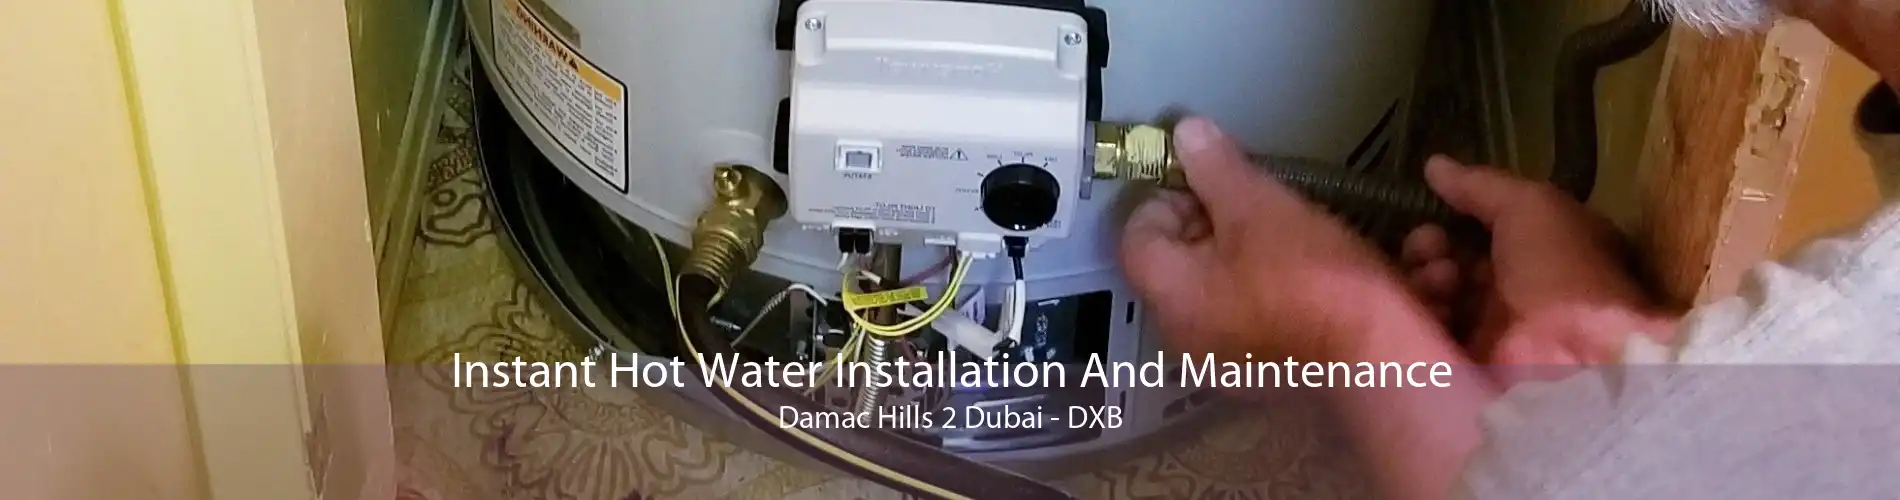 Instant Hot Water Installation And Maintenance Damac Hills 2 Dubai - DXB